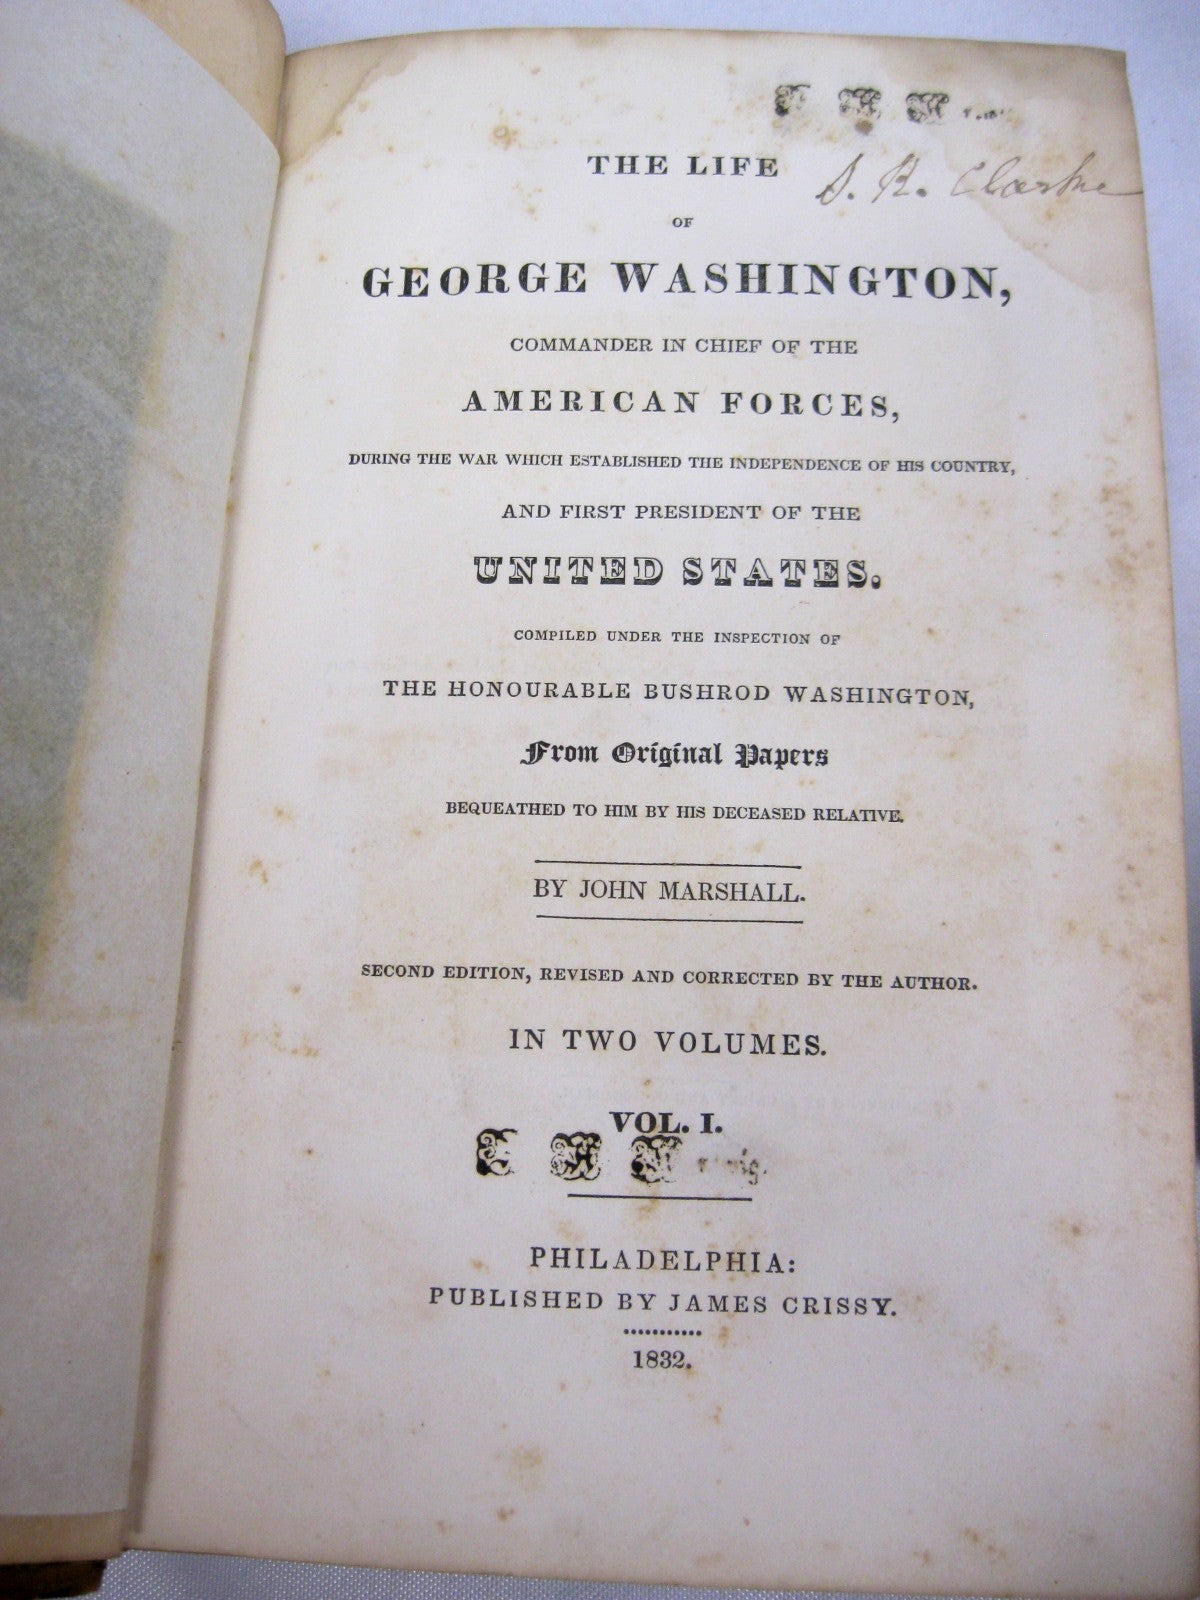 Life of George Washington by James Marshall